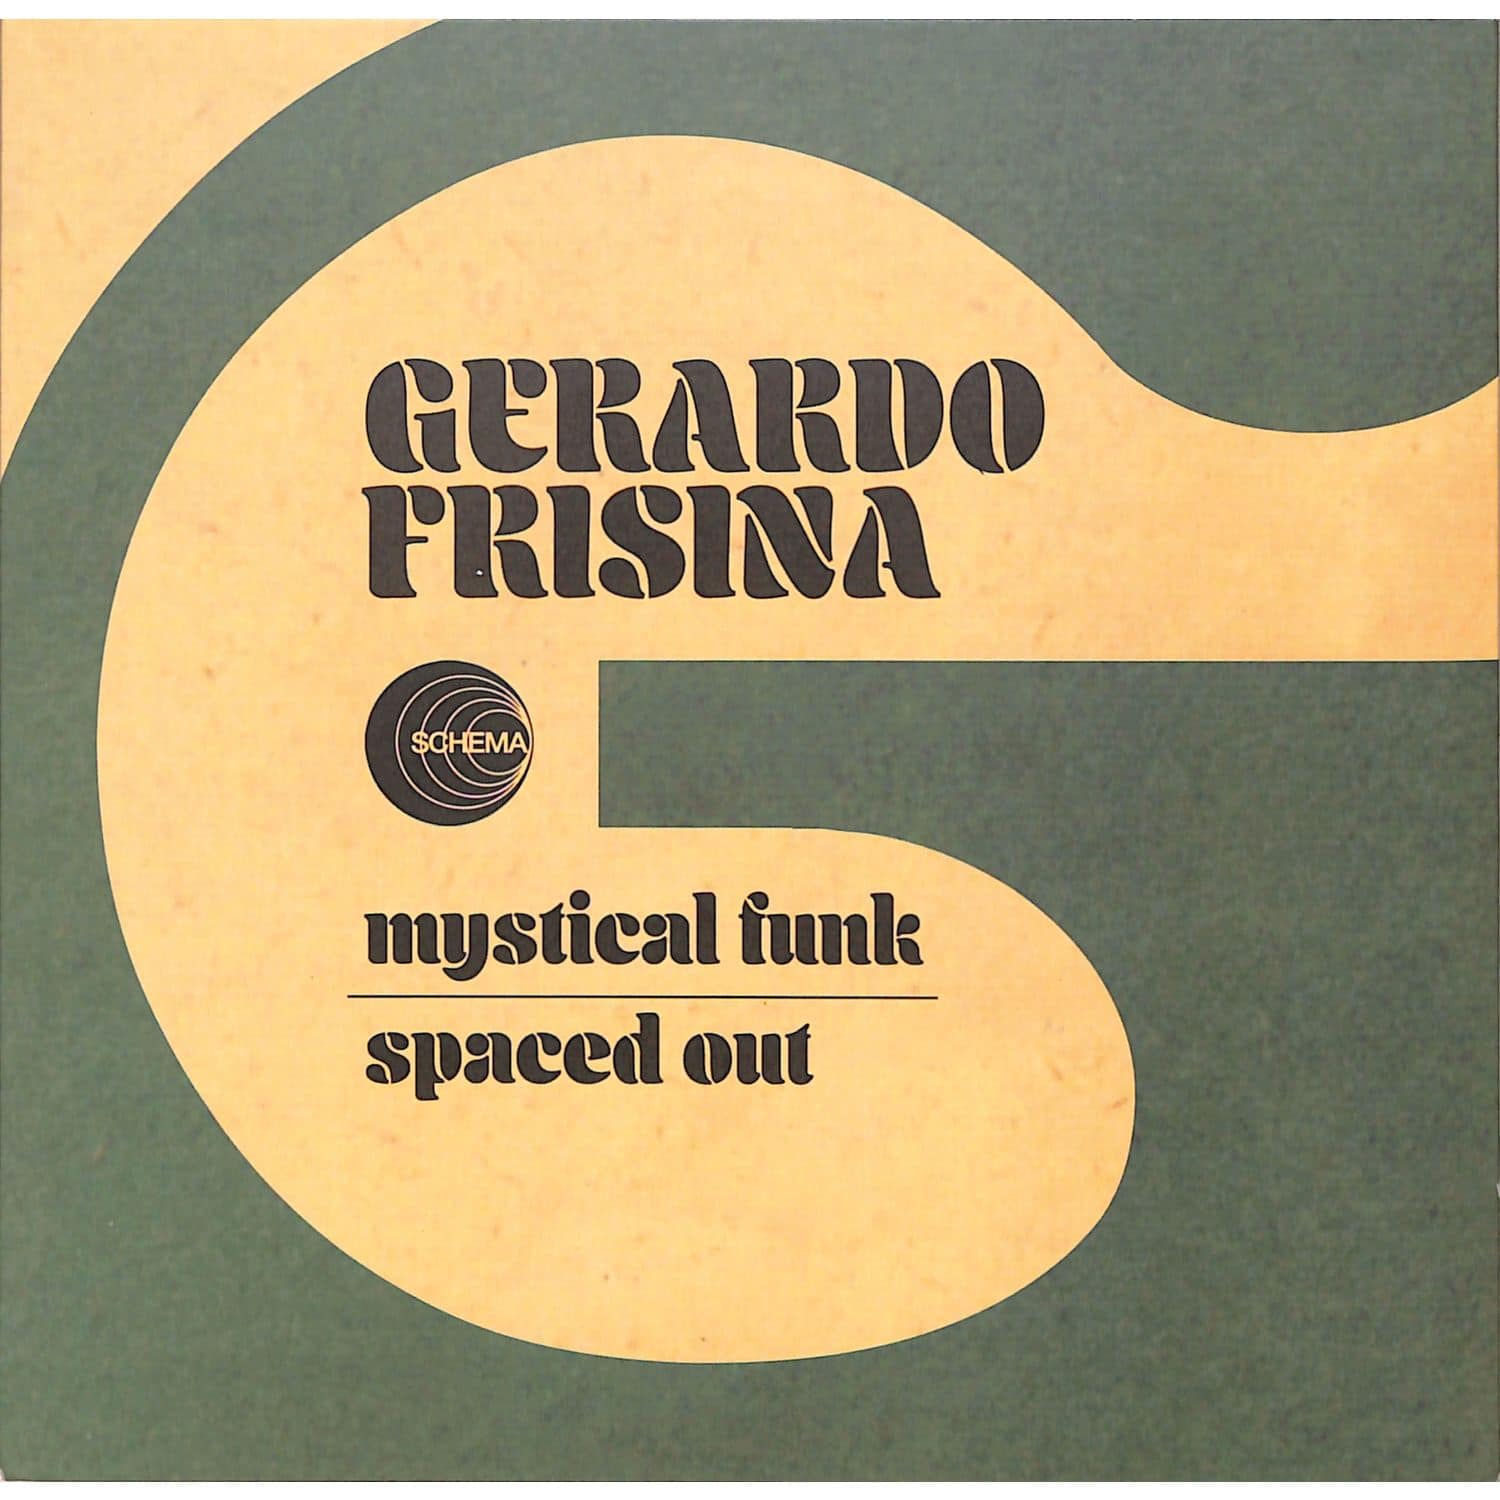 Gerardo Frisina - MYSTICAL FUNK / SPACED OUT 